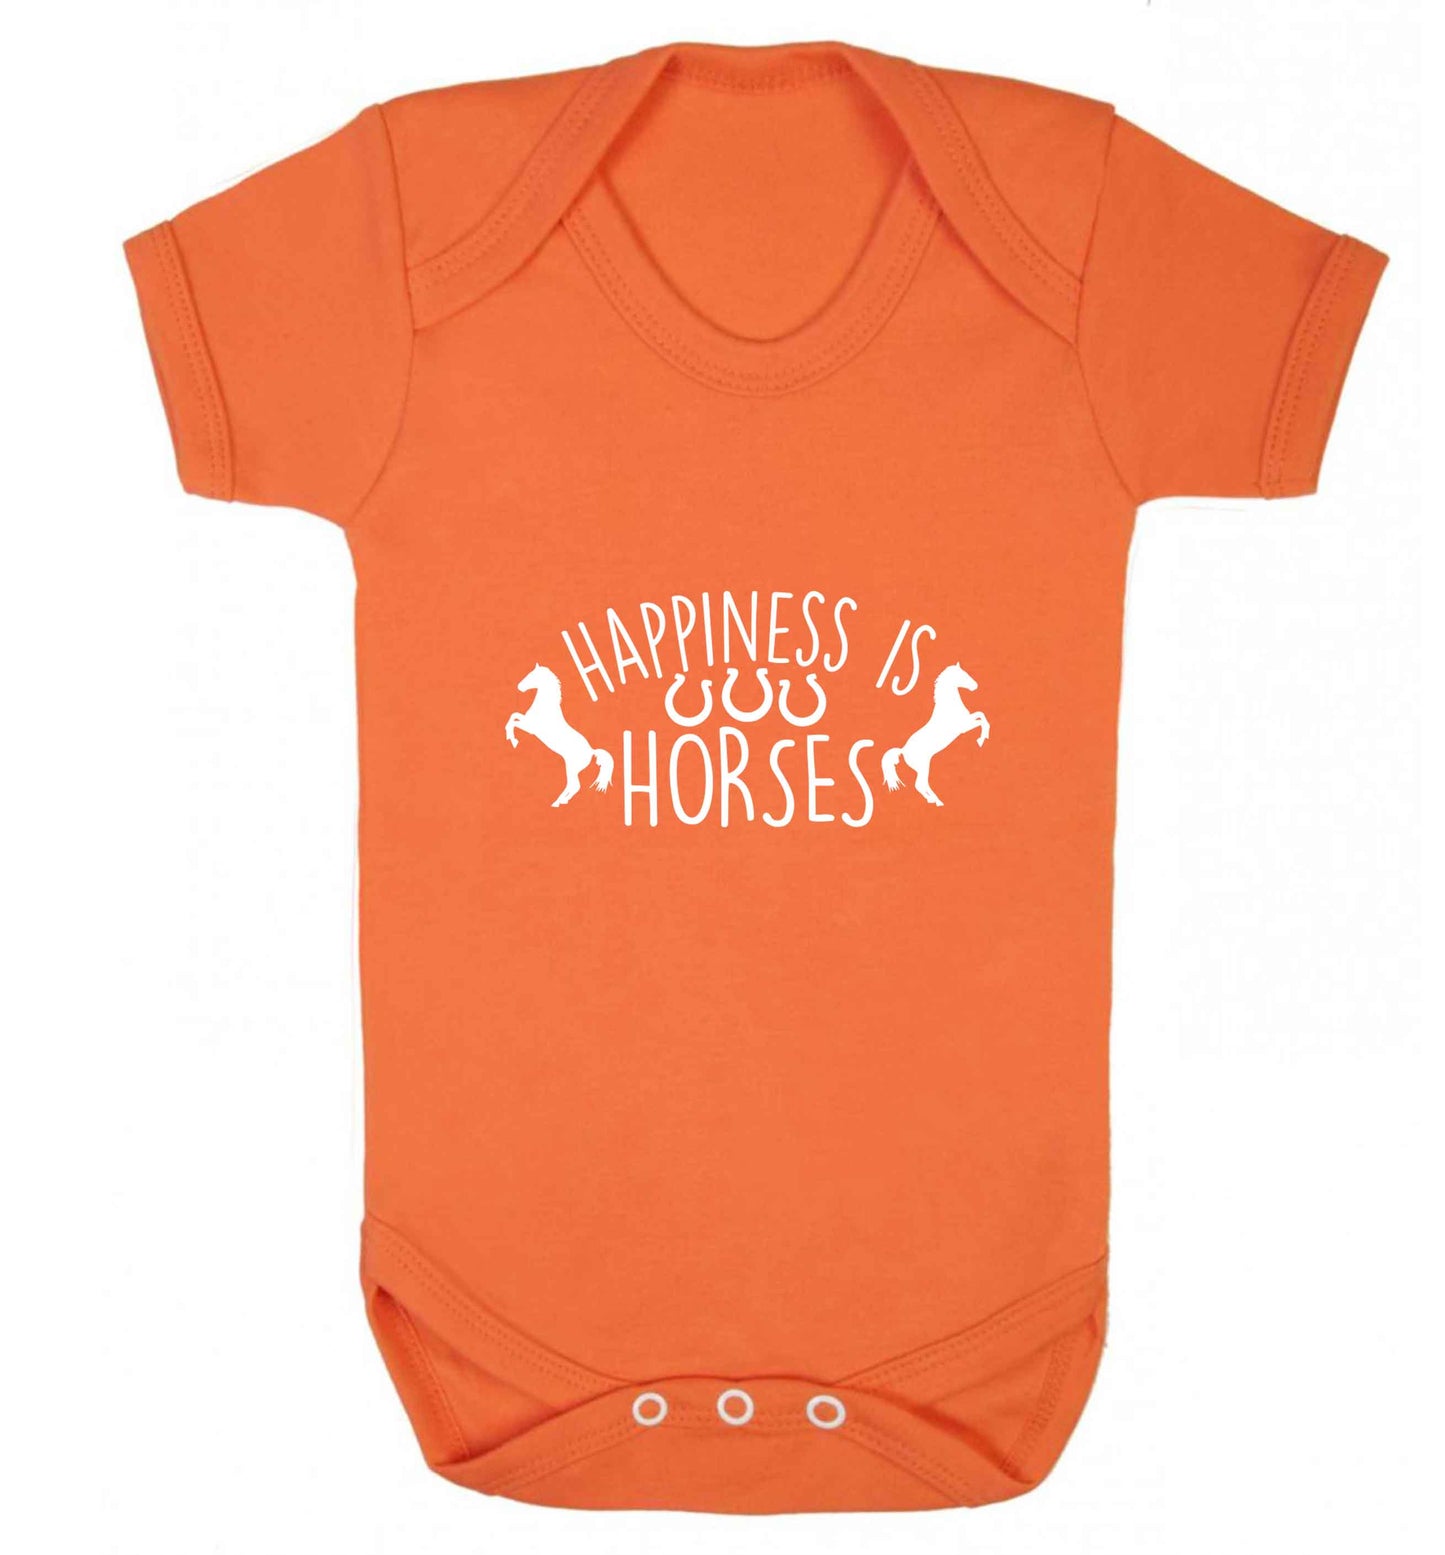 Happiness is horses baby vest orange 18-24 months